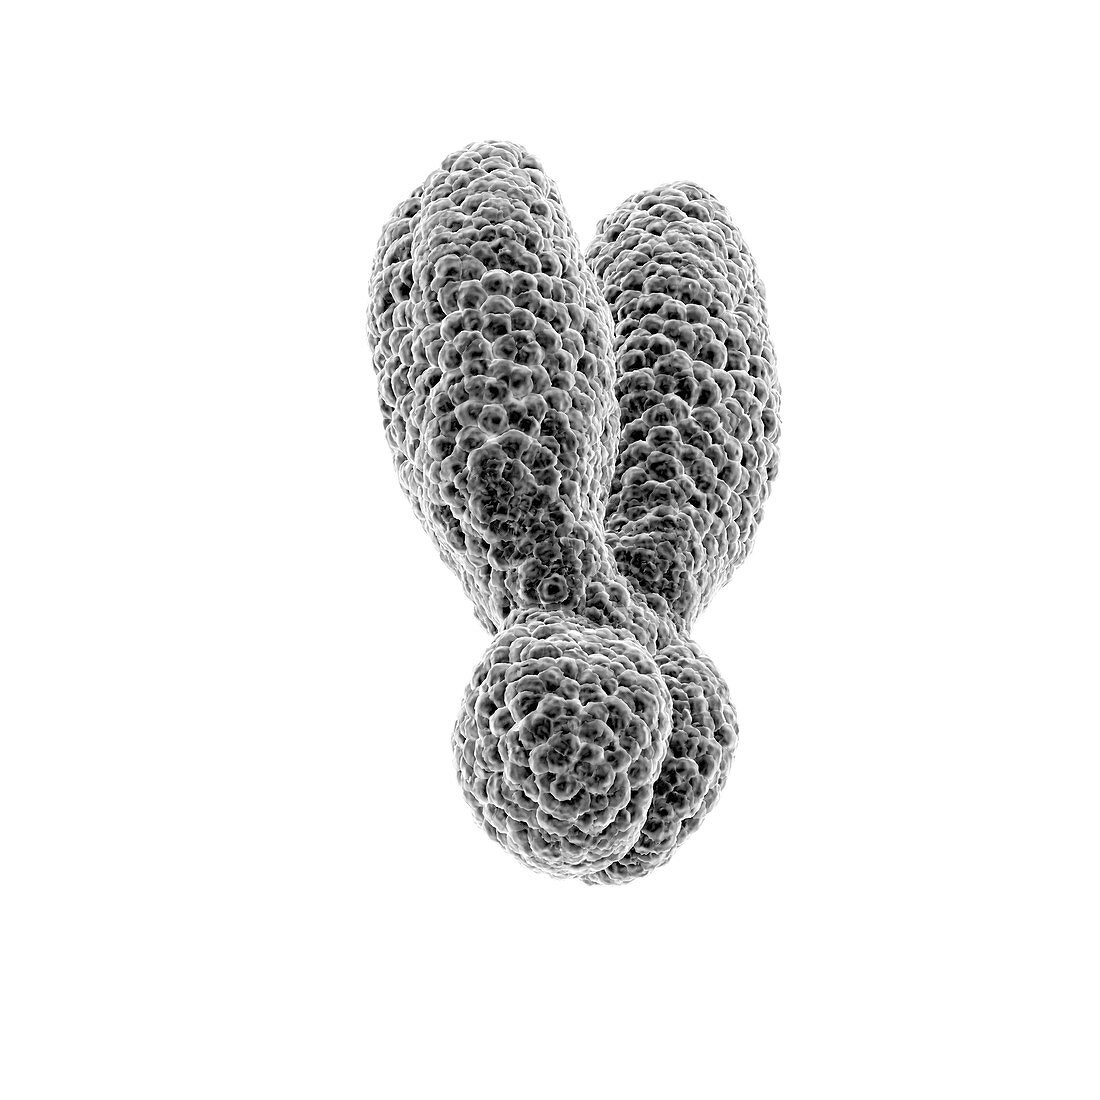 Y chromosome, illustration